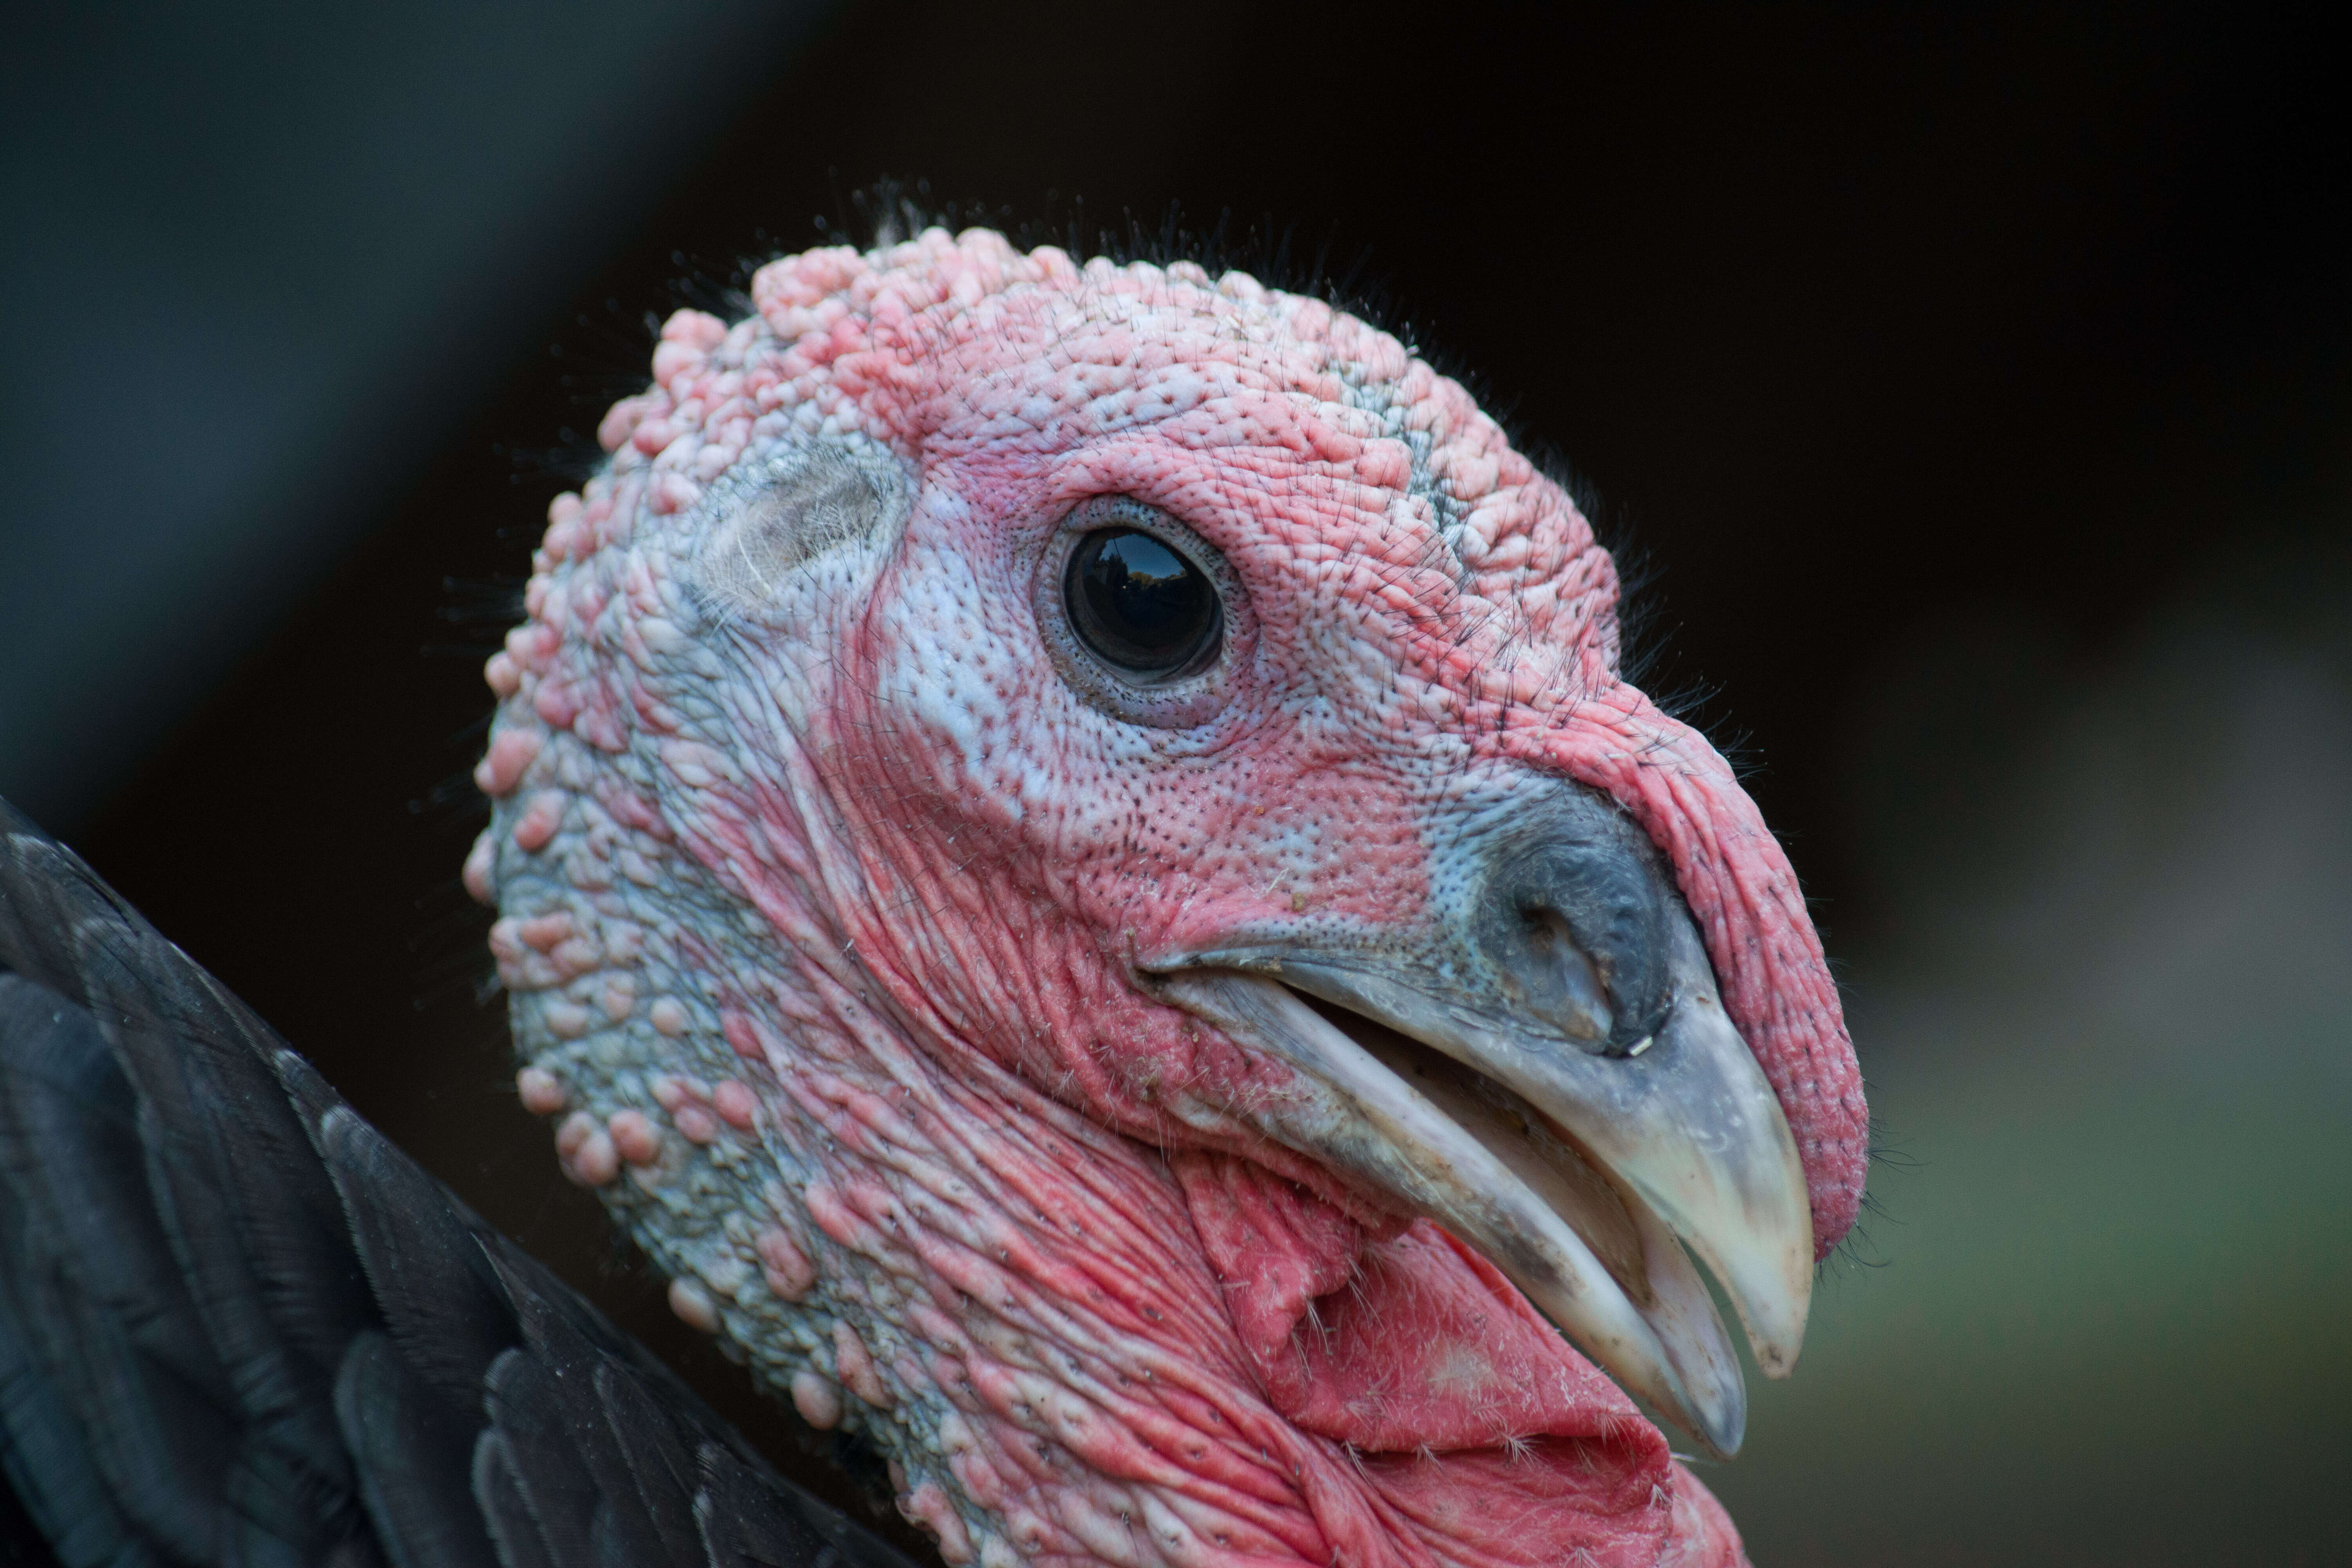 Image of turkey